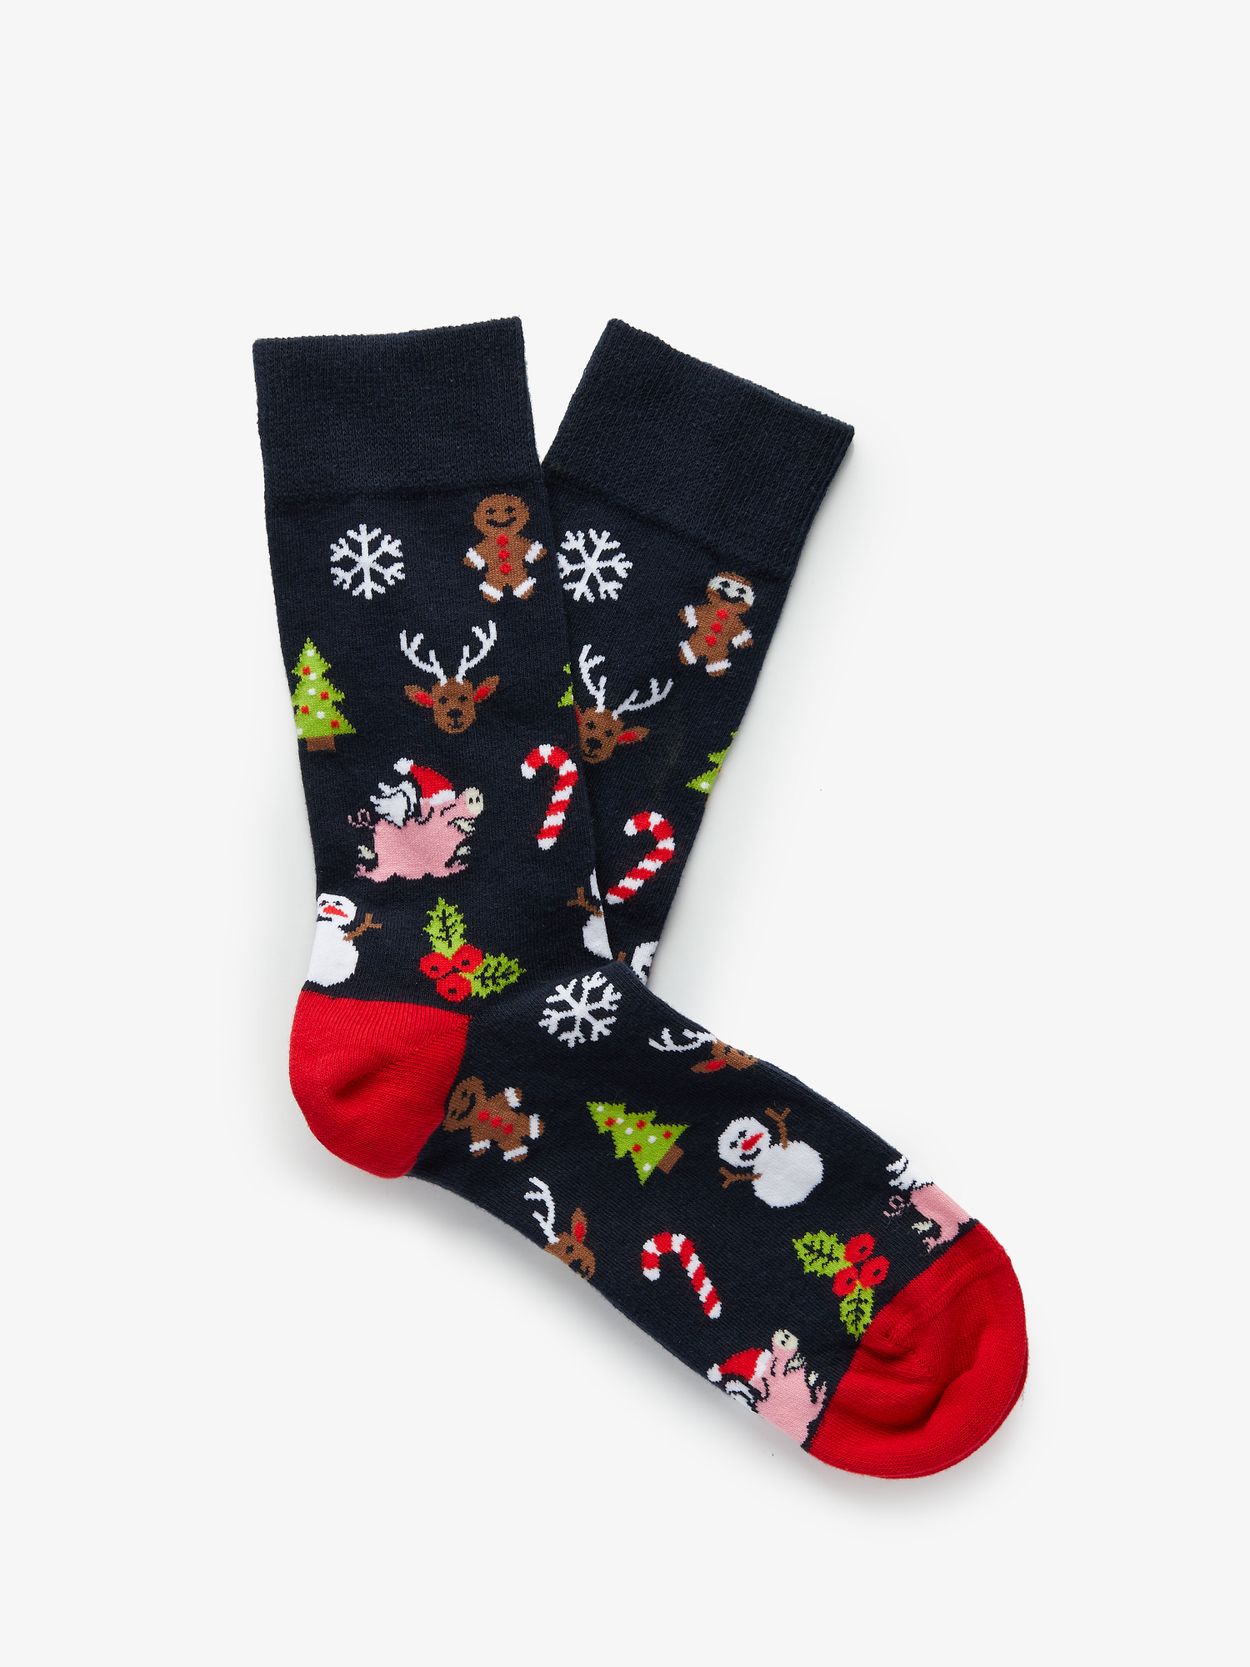 Blue Christmas Socks